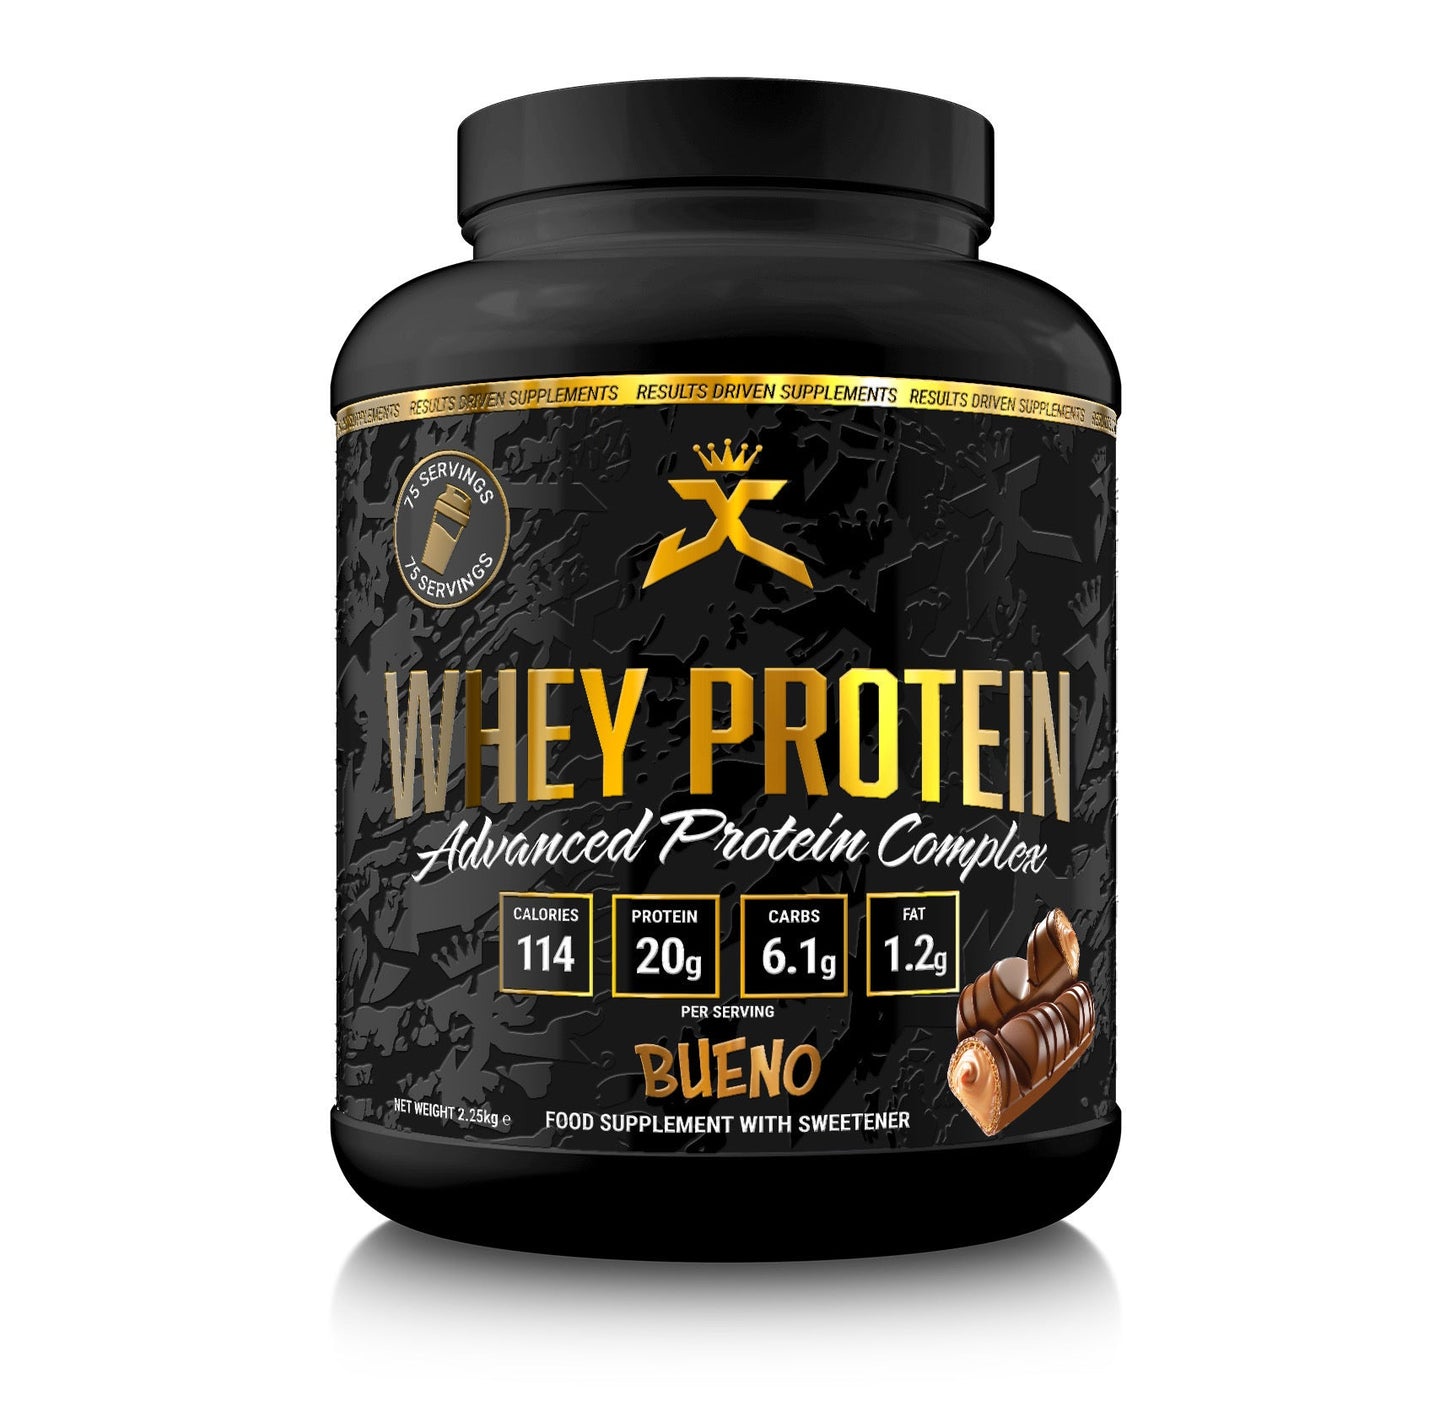 Whey Protein Advanced